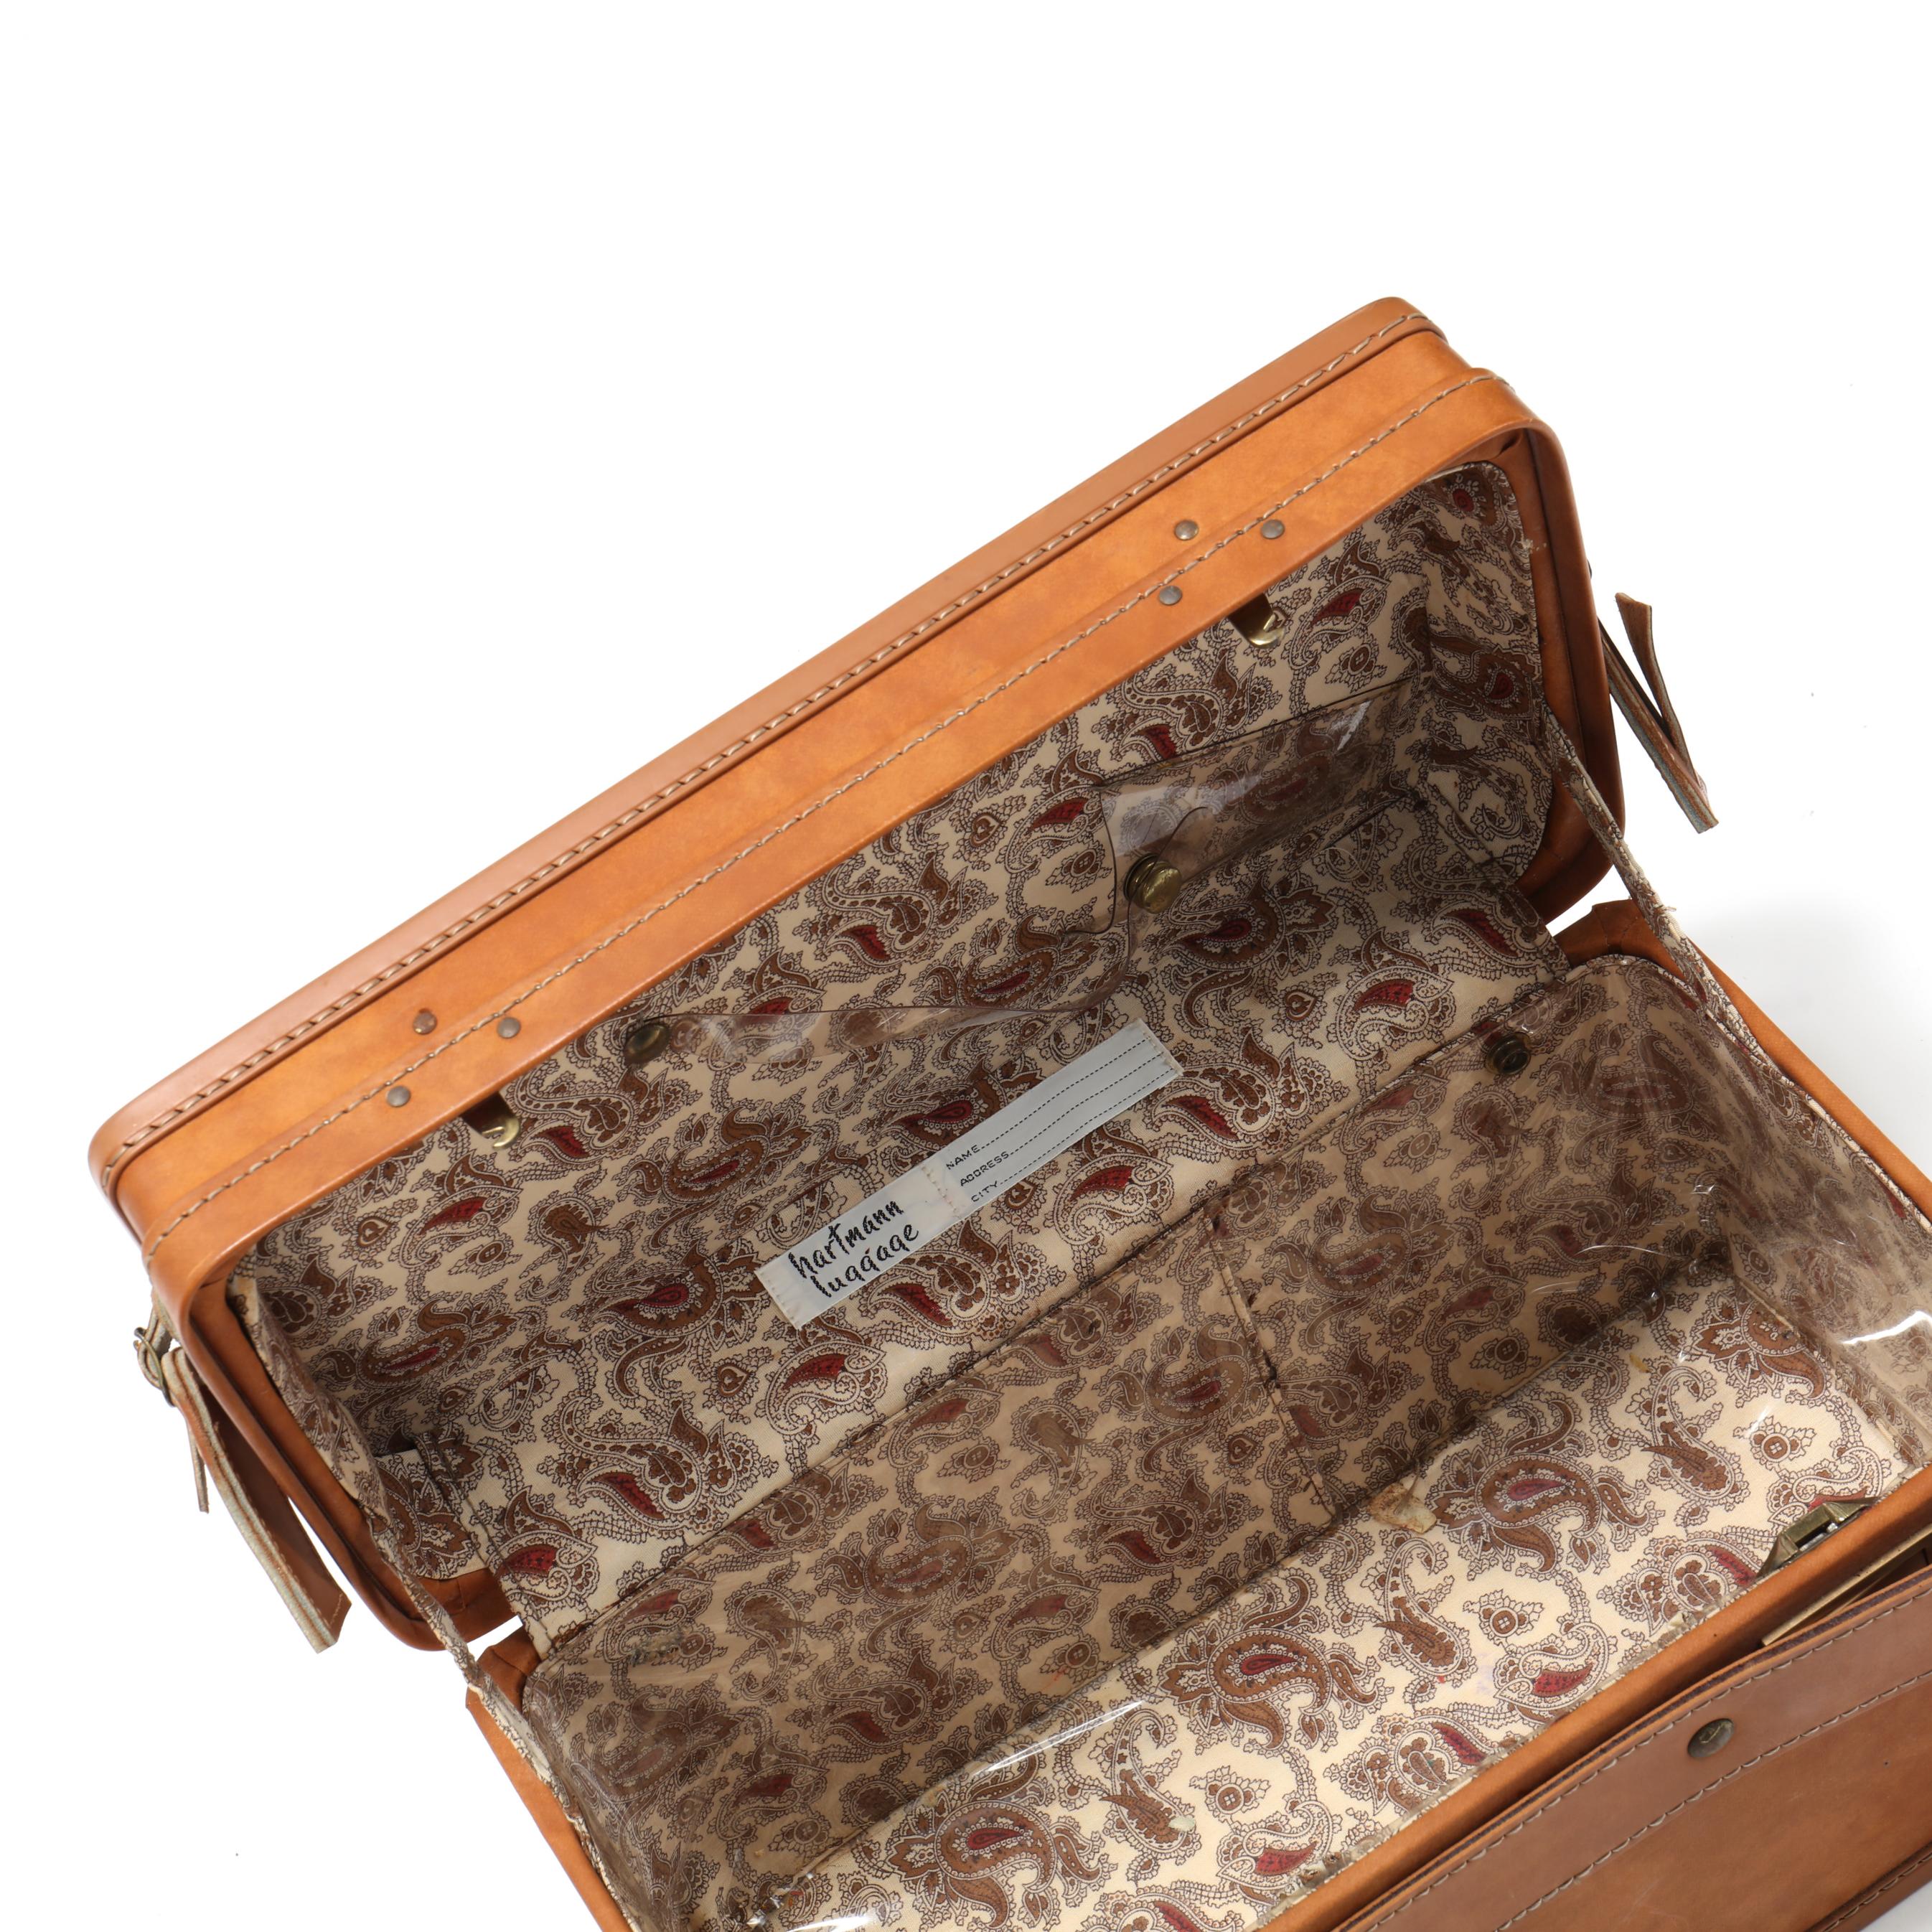 Sold at Auction: Vintage Hartmann Luggage 4 Piece Set